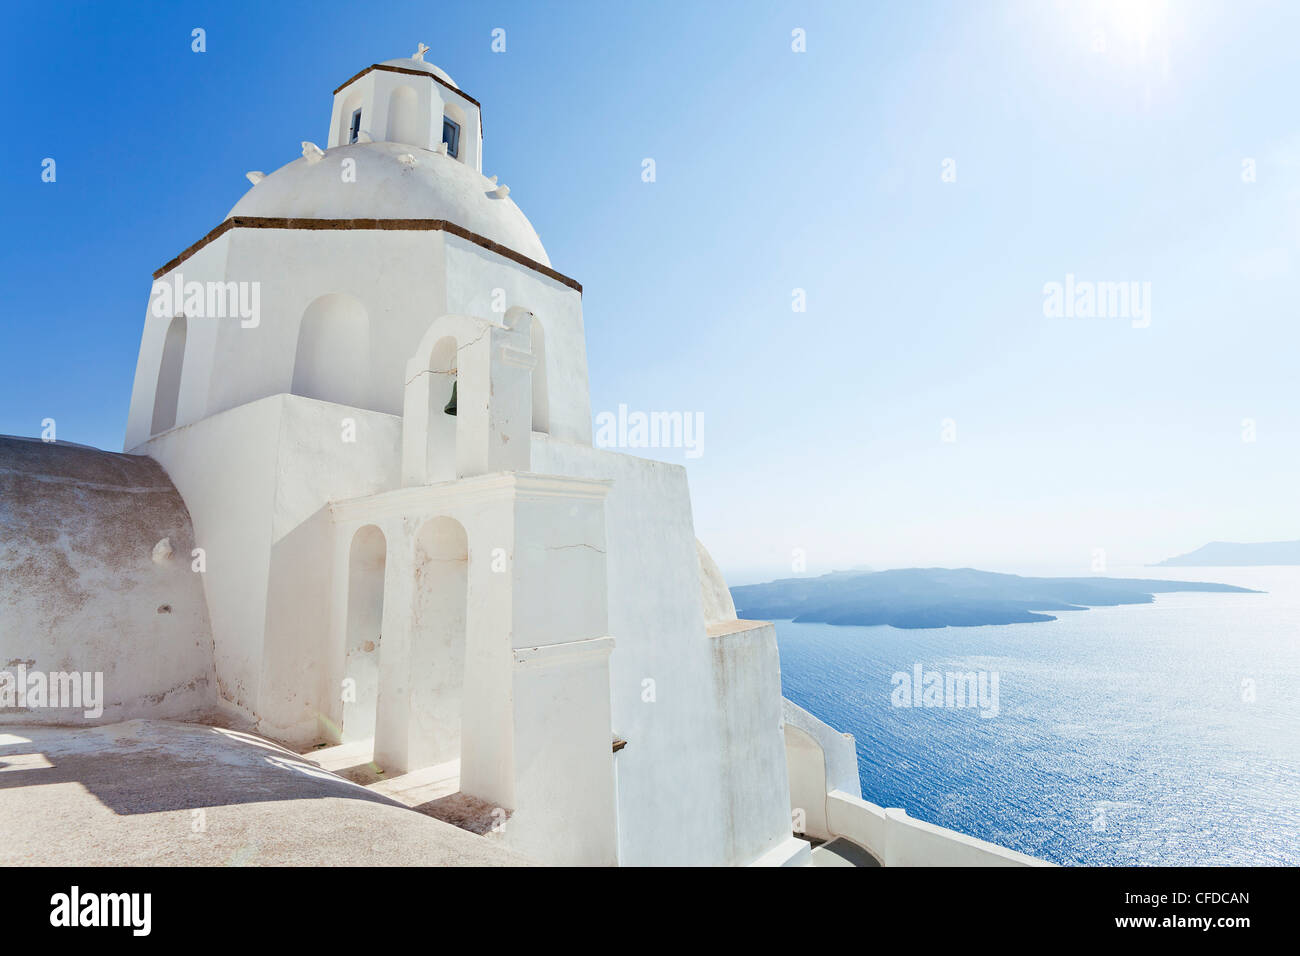 Griechisch-orthodoxe Kirche in Fira, Santorini (Thira), Kykladen, Ägäis, griechische Inseln, Griechenland, Europa Stockfoto